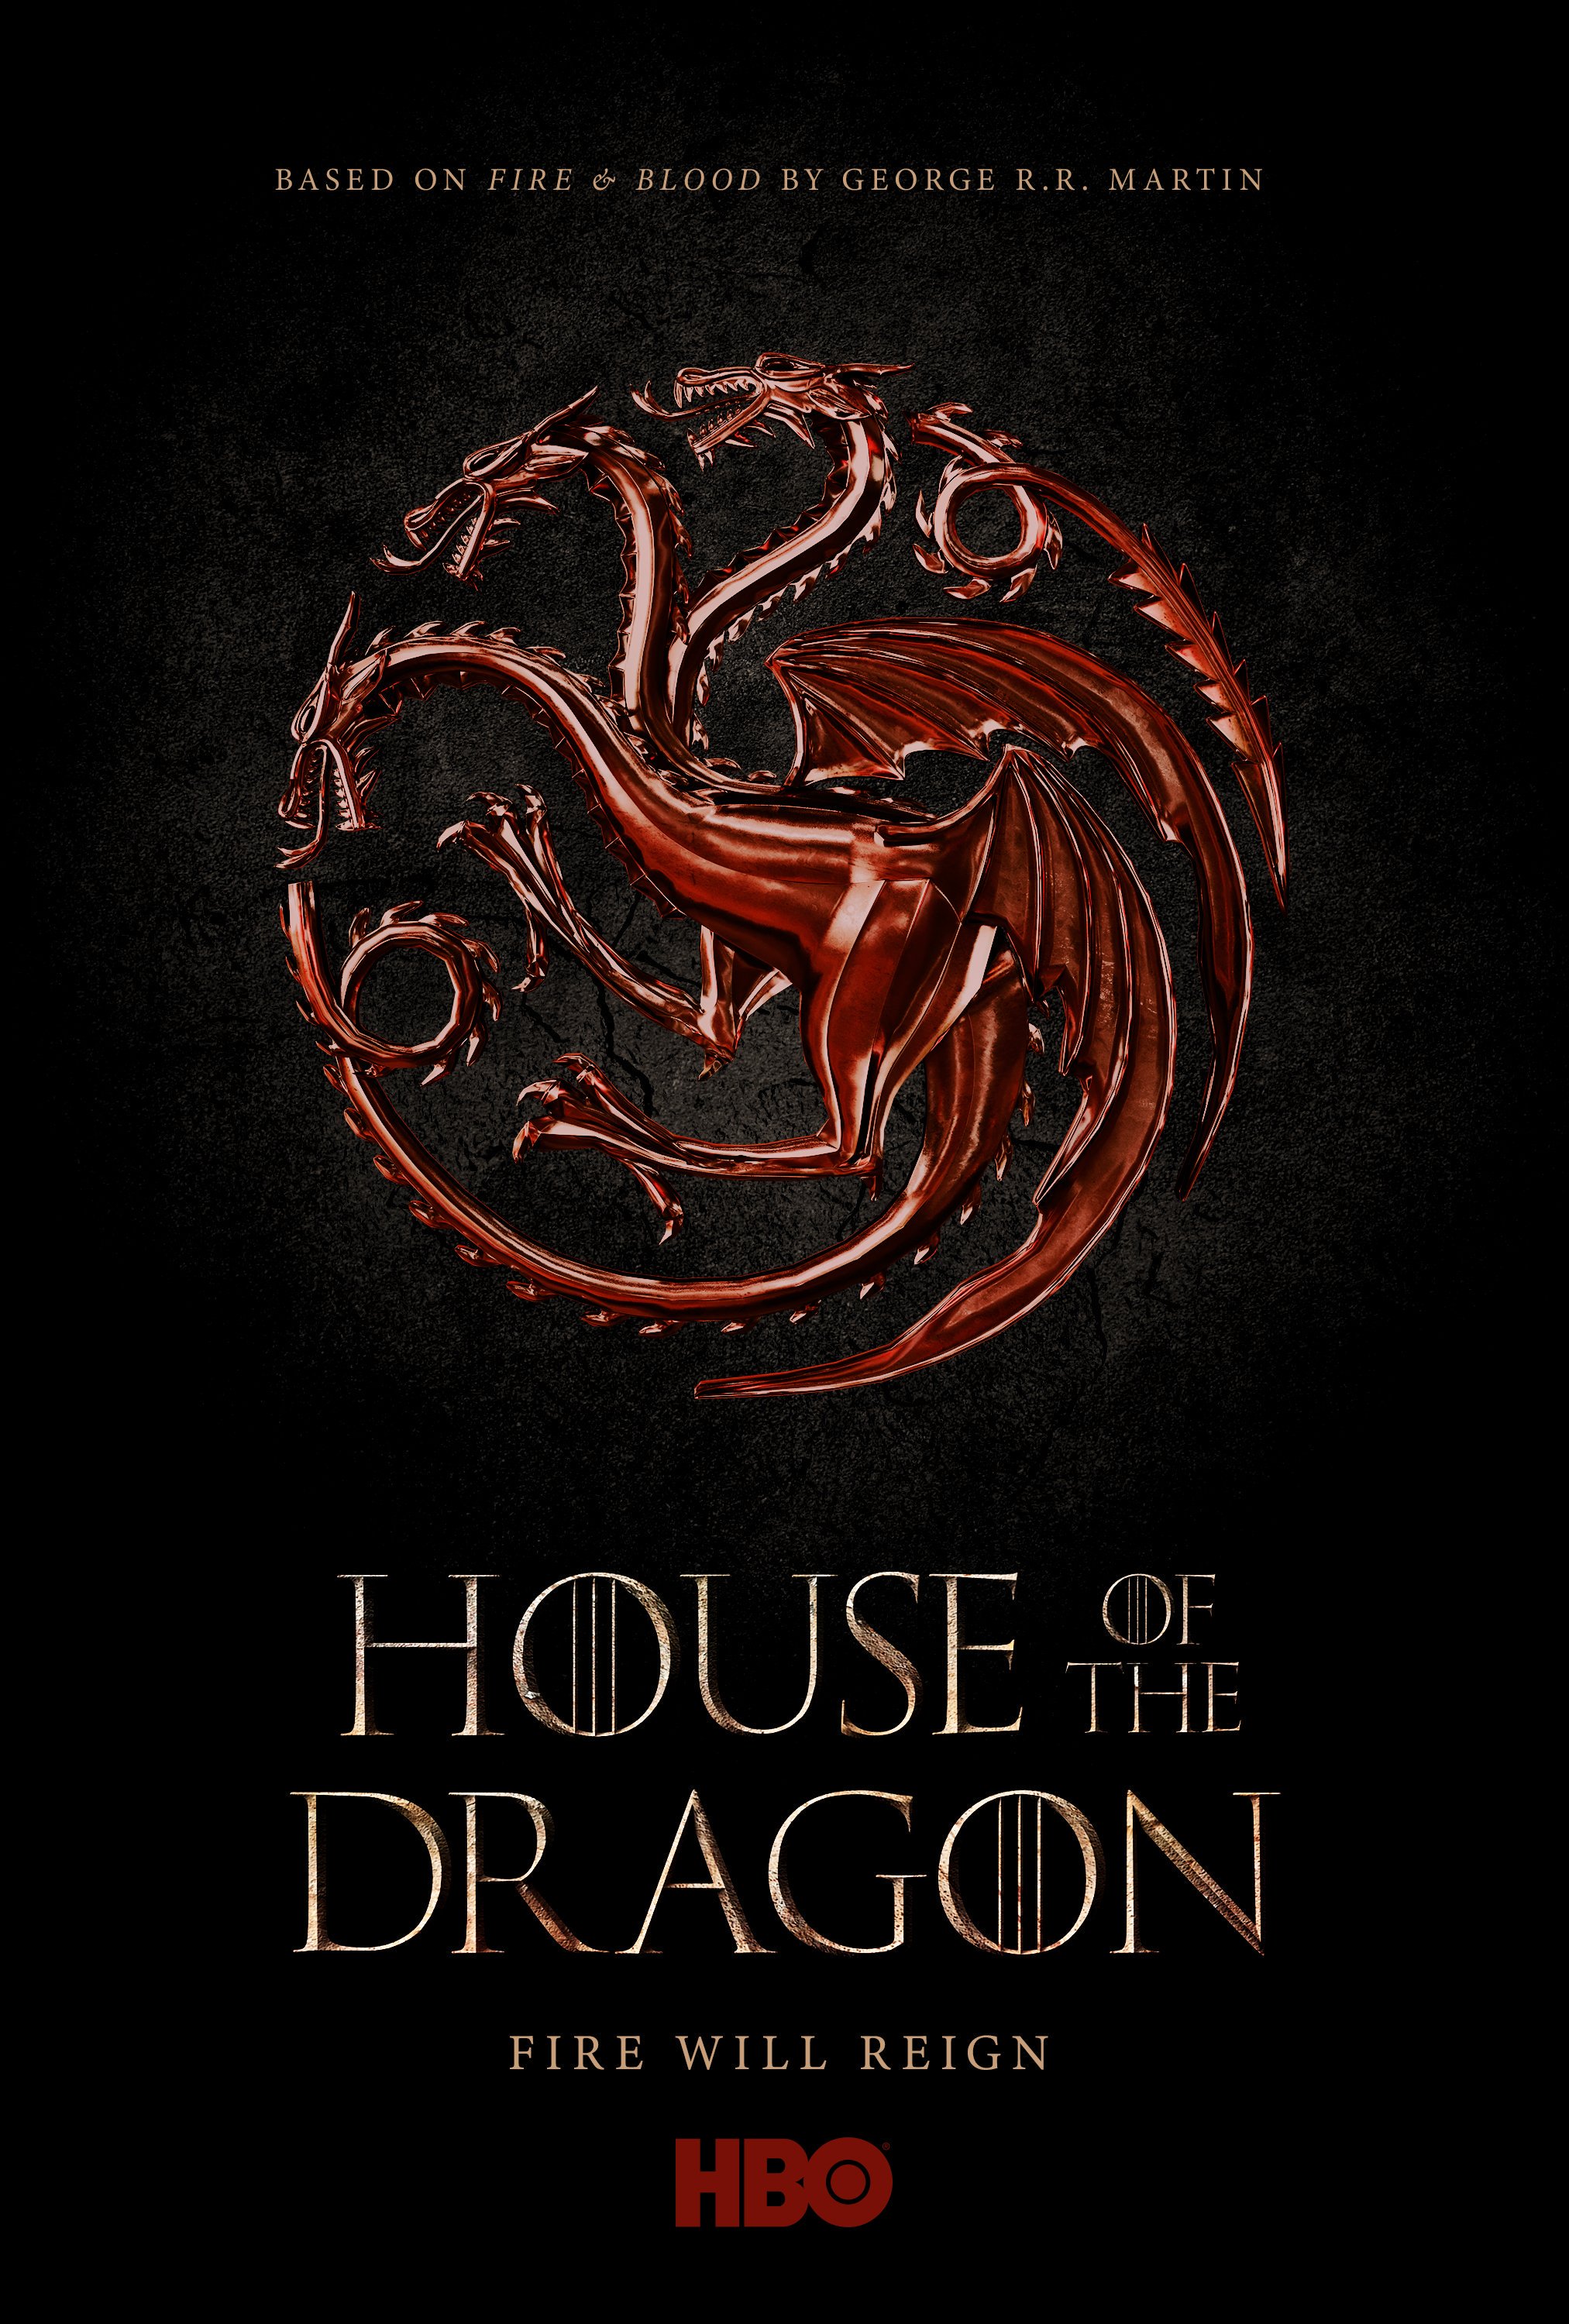 Série House of the Dragon, prequela de A Guerra dos Tronos